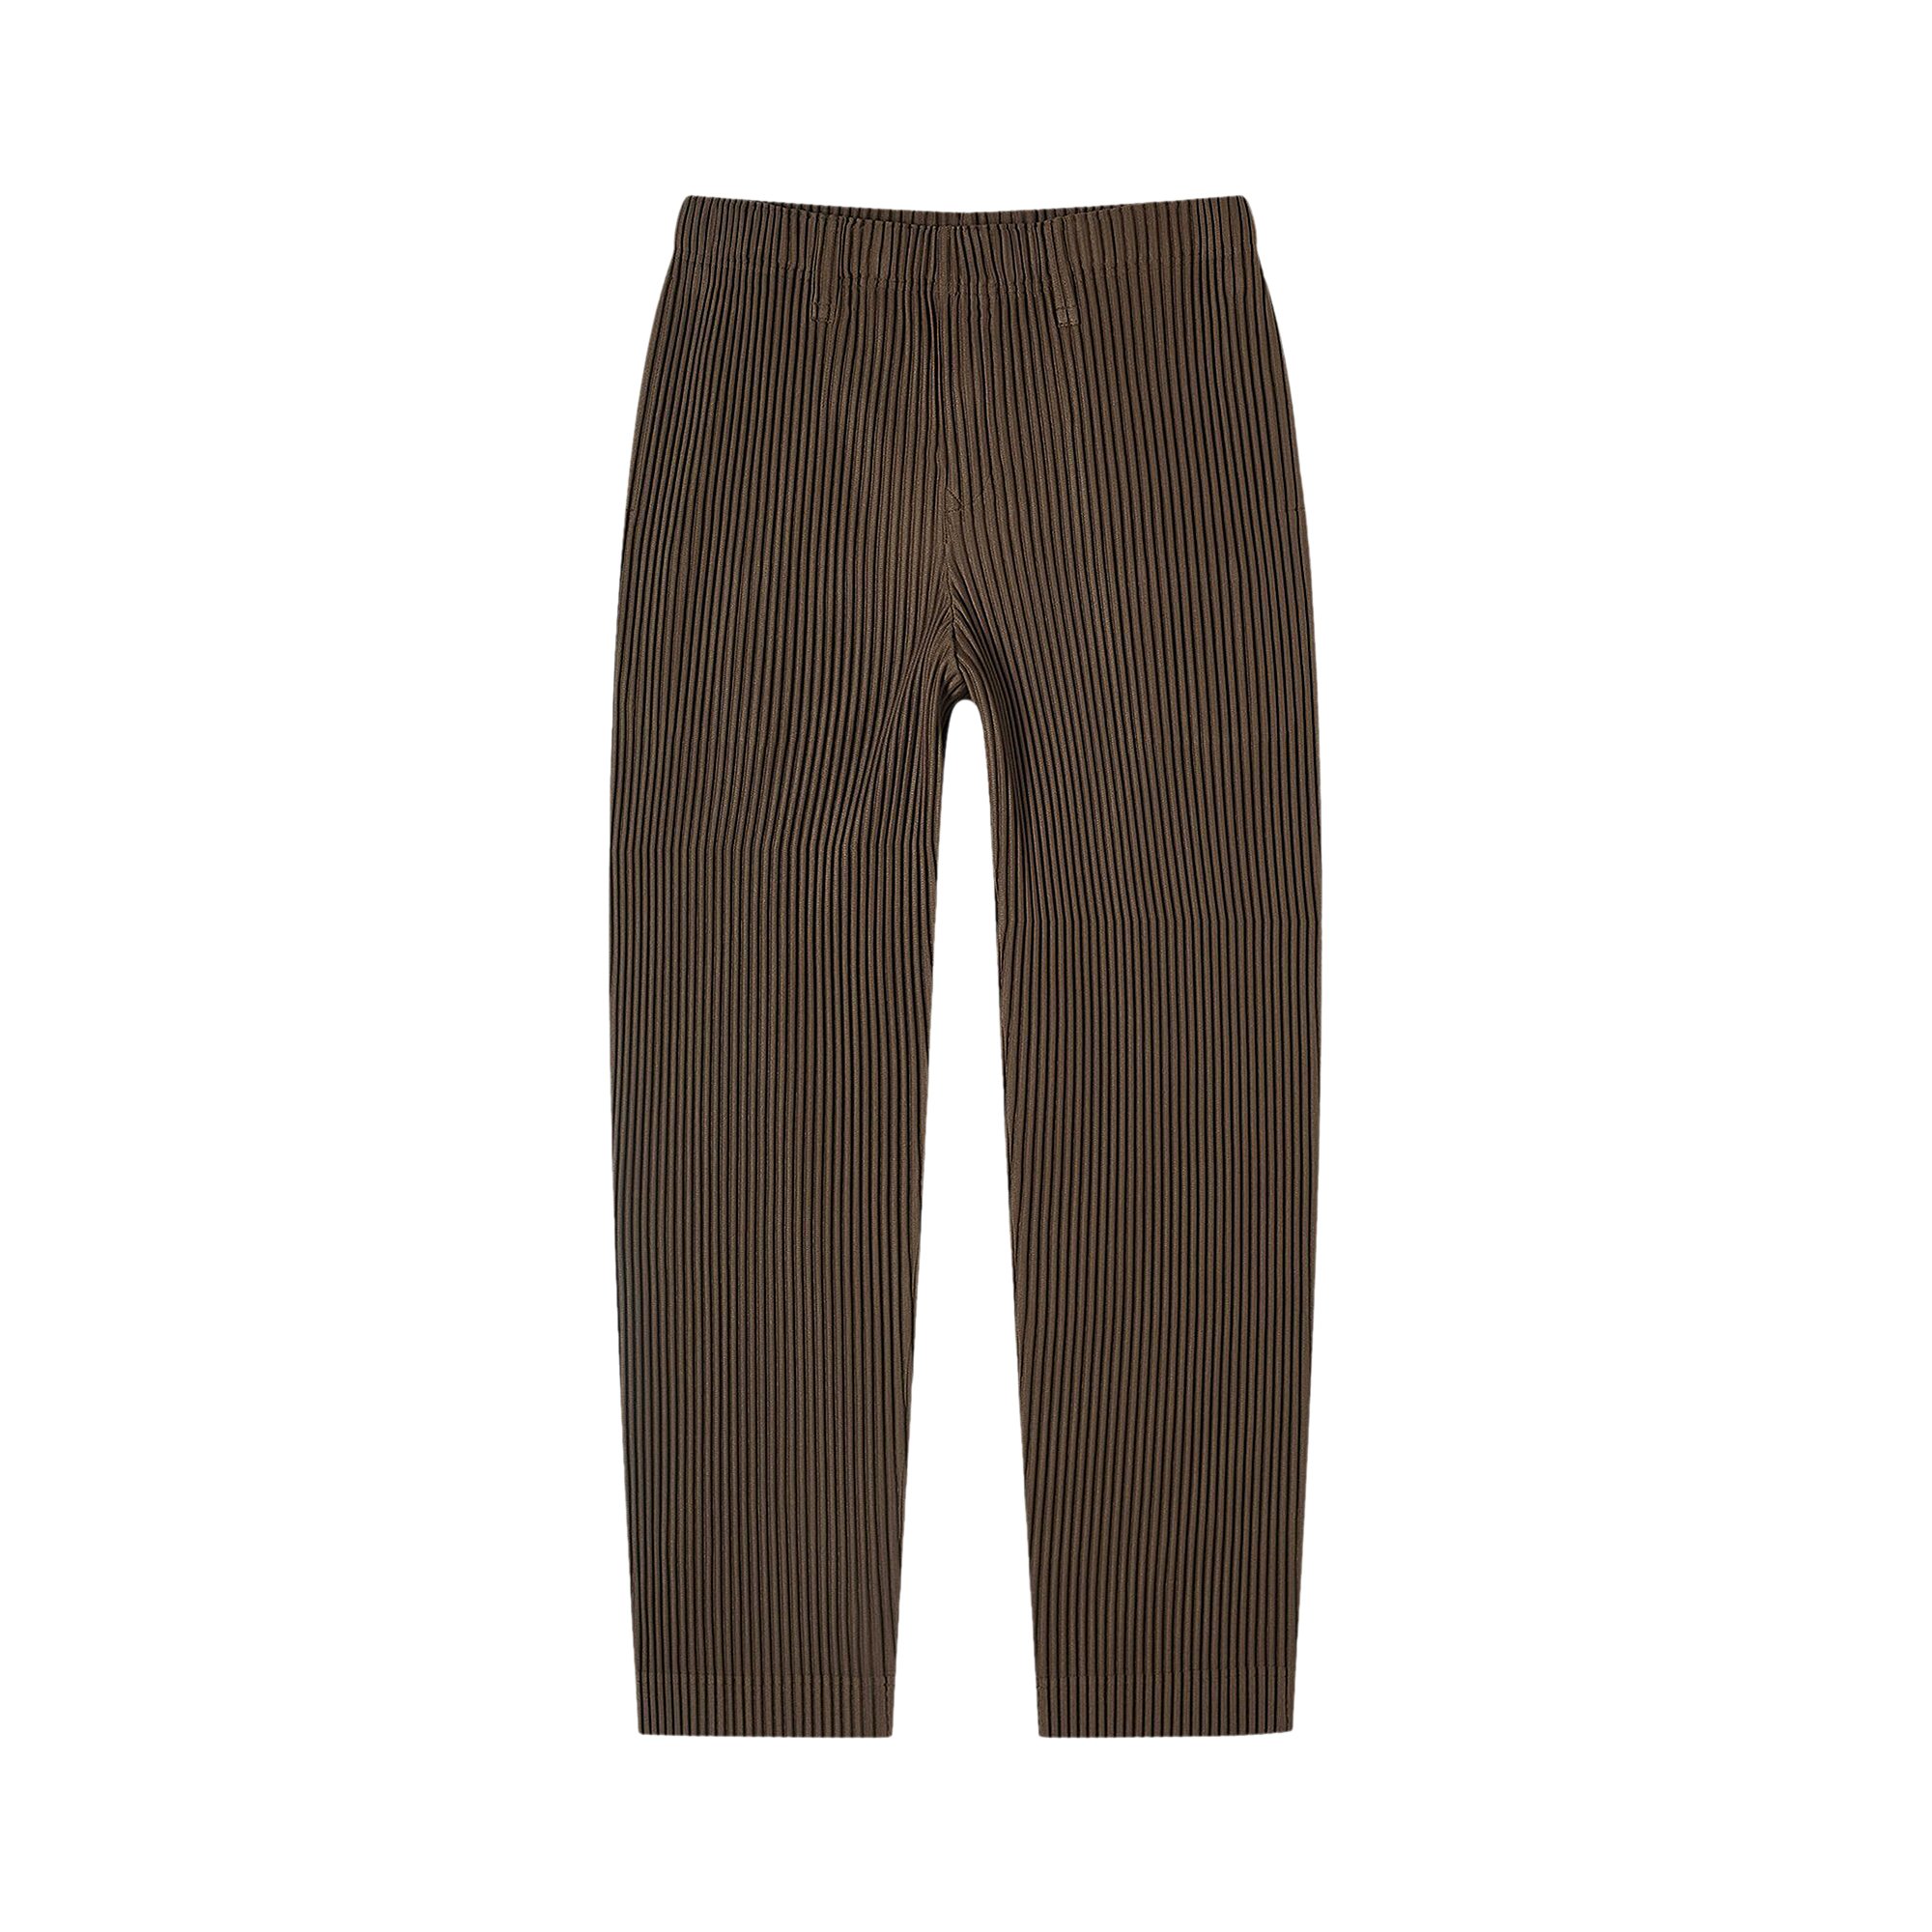 Buy Homme Plissé Issey Miyake Tailored Pleats Pants 'Dark Khaki ...